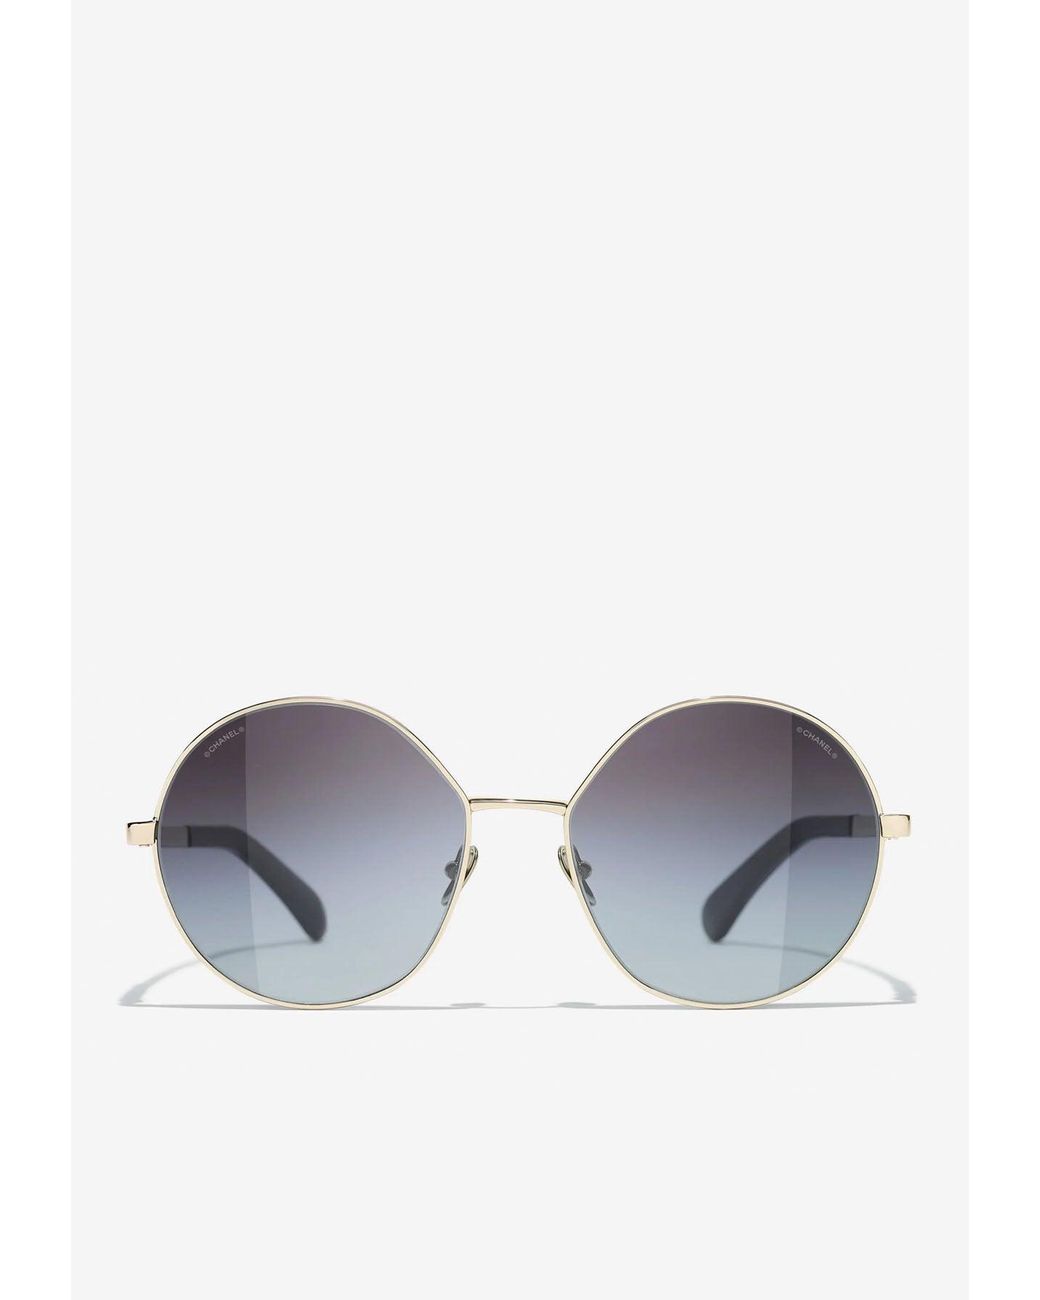 Chanel Round Metal Sunglasses in Grey | Lyst Australia